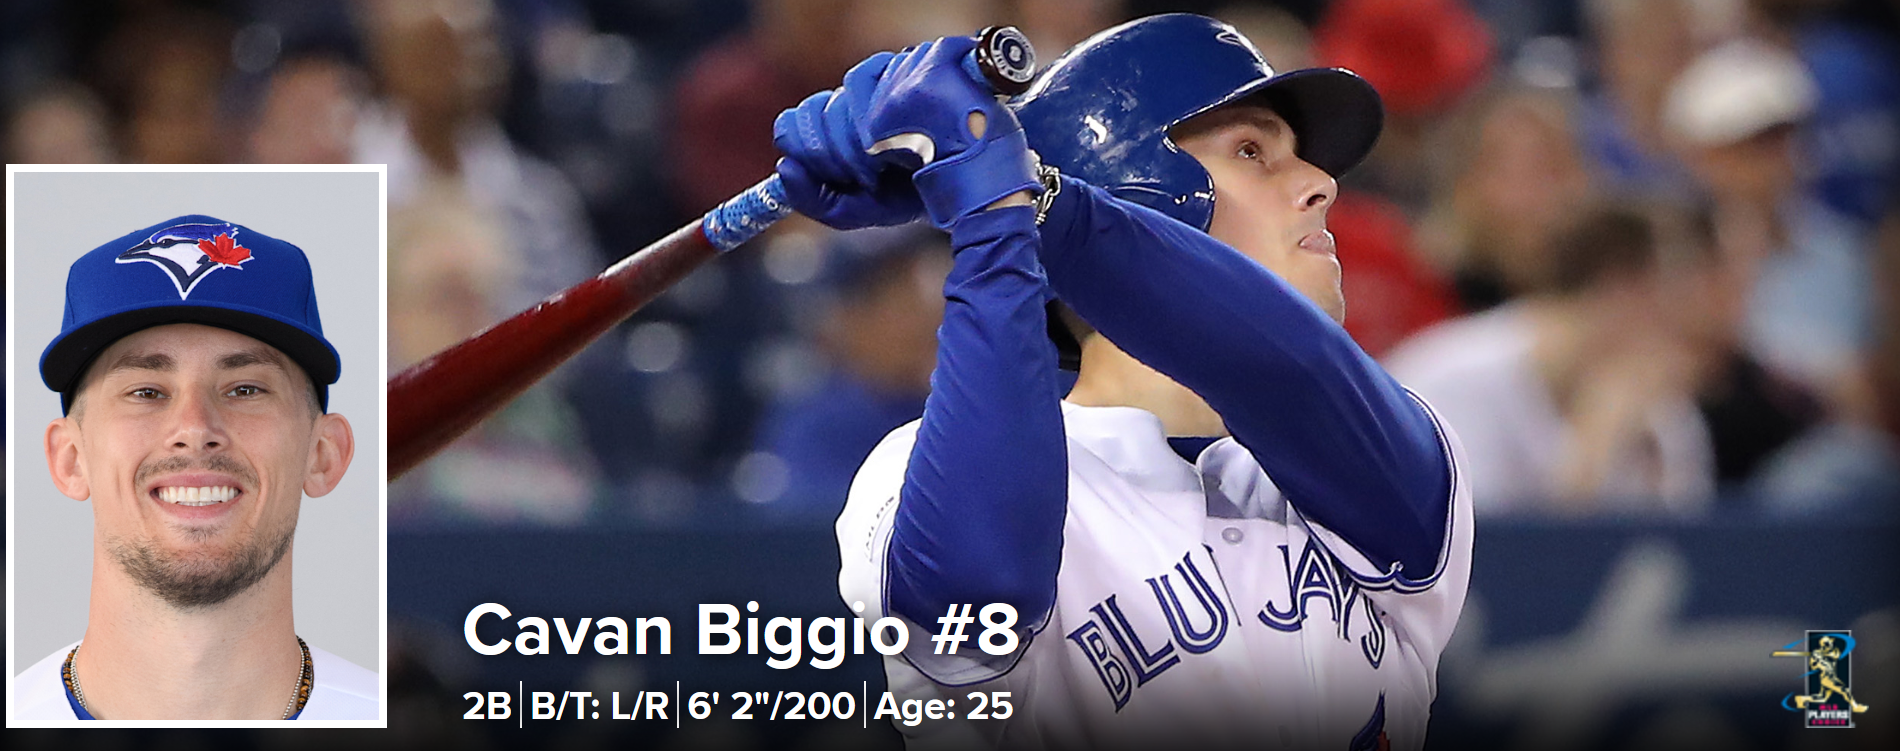 Cavan Biggio, Baseball Wiki